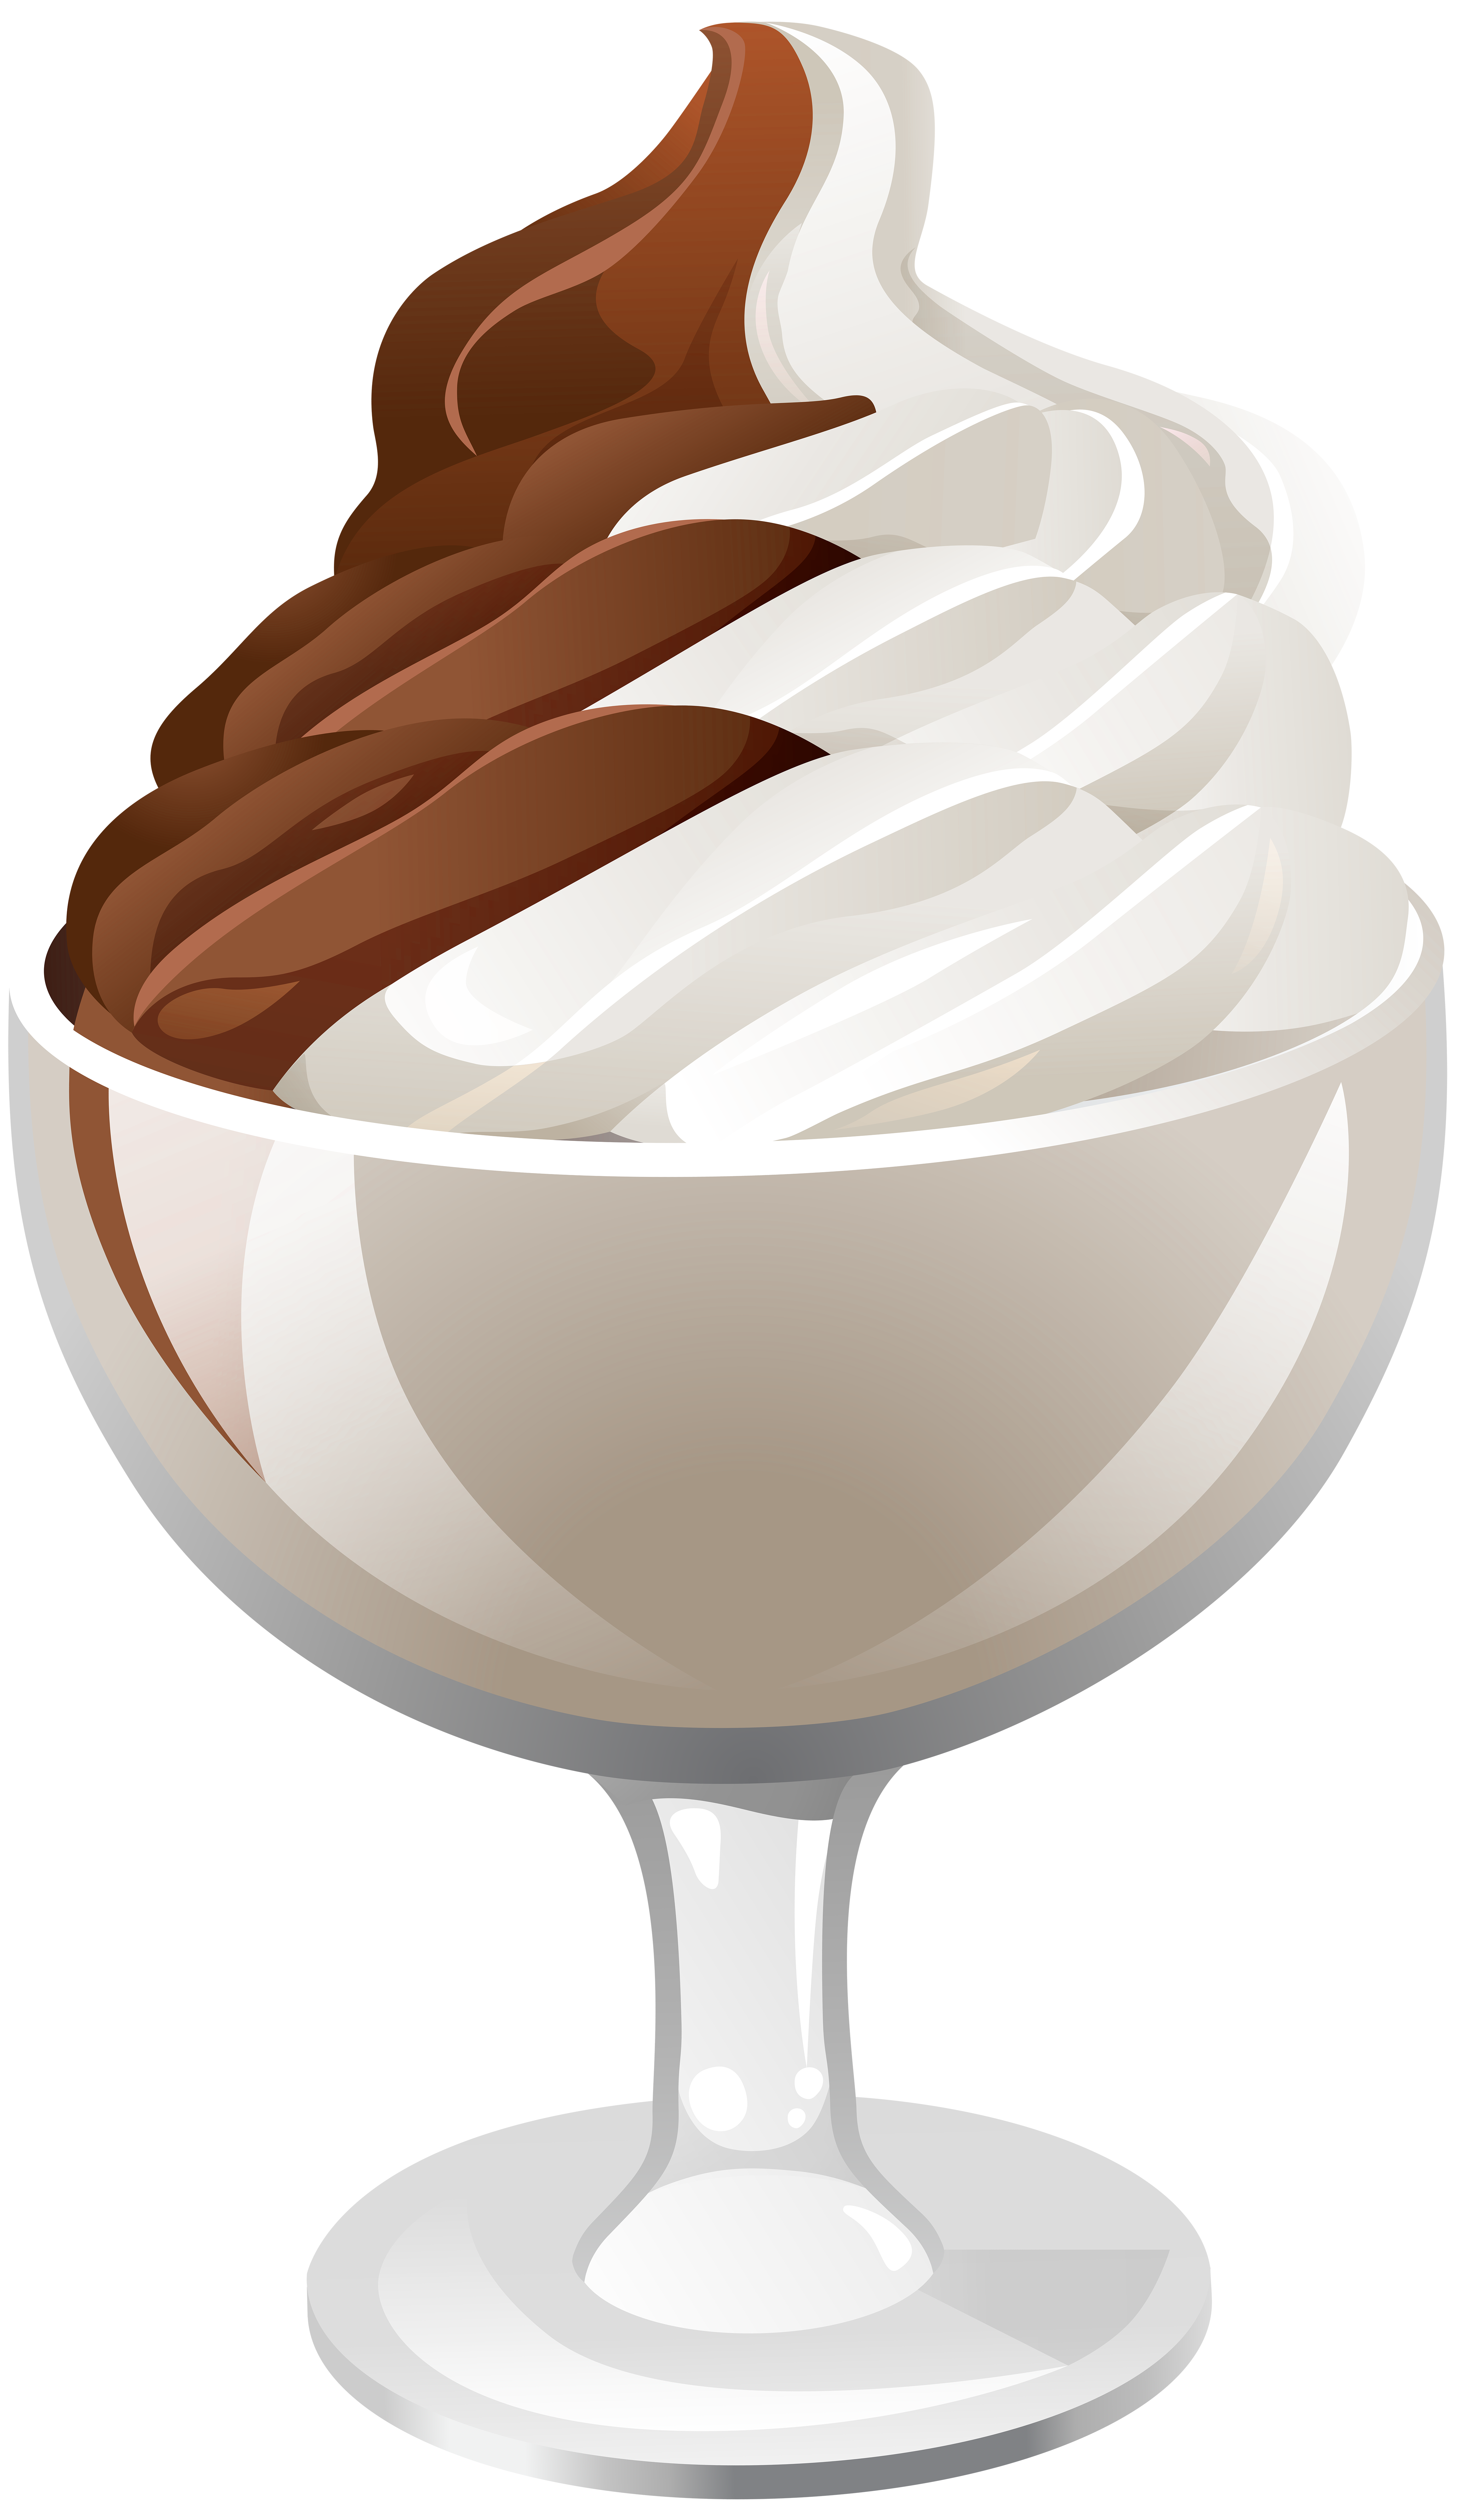 ice cream sundae png